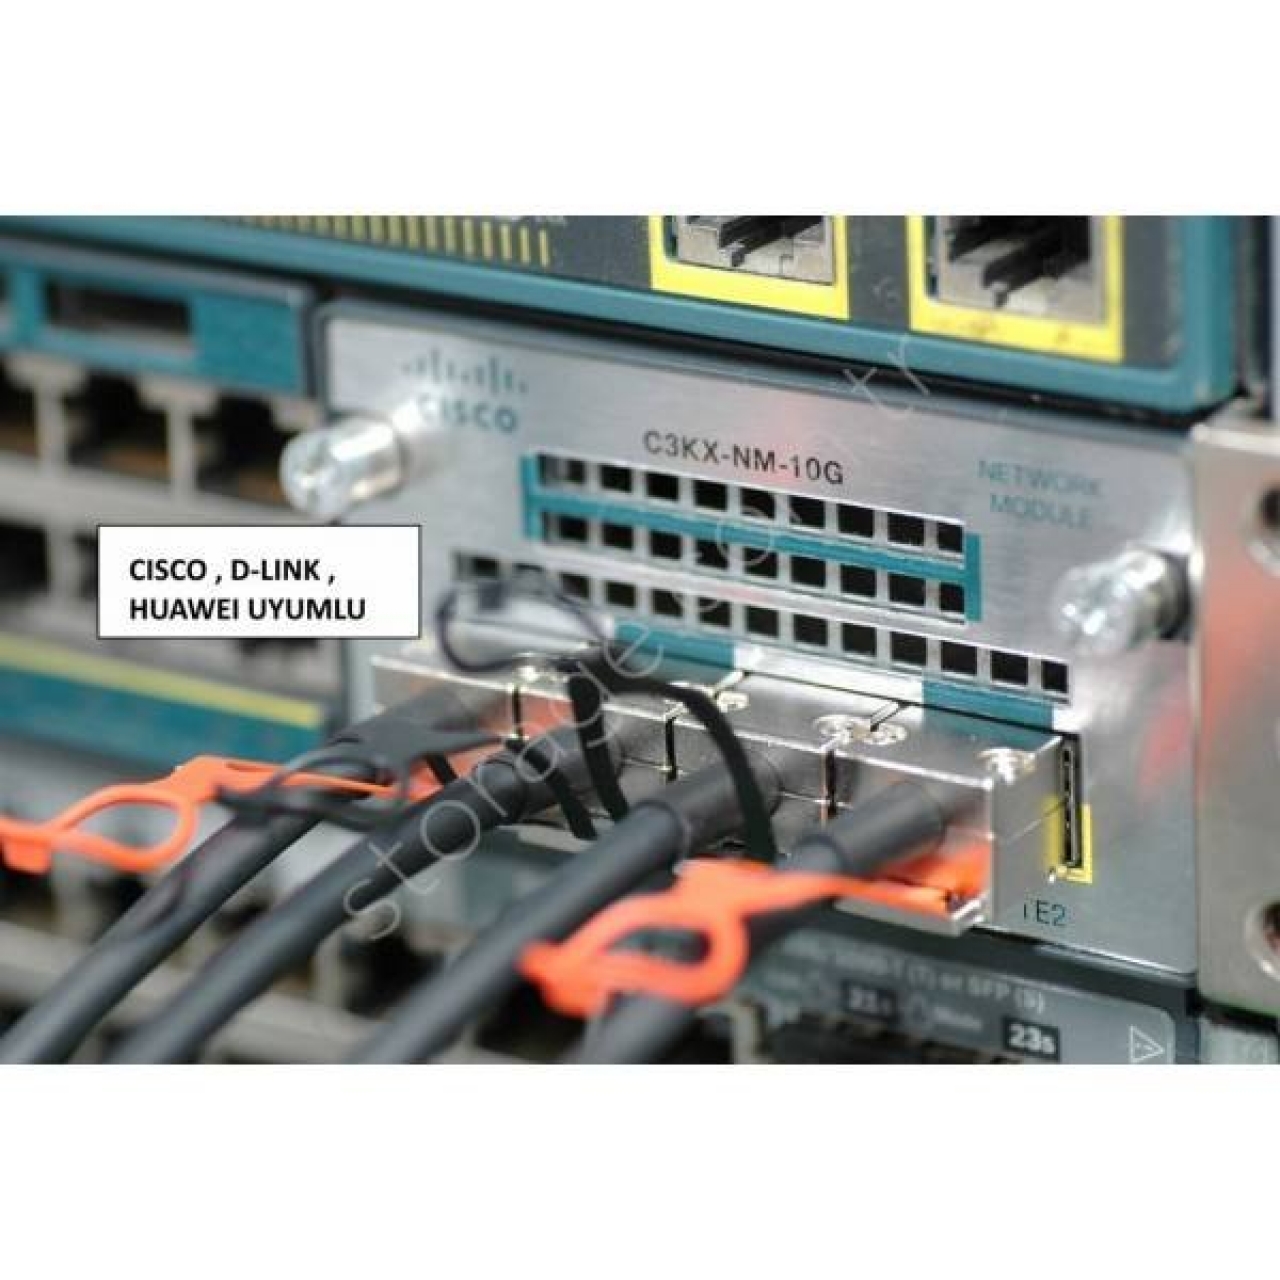 5 METRE DAC KABLO 10GbE for Cisco/intel